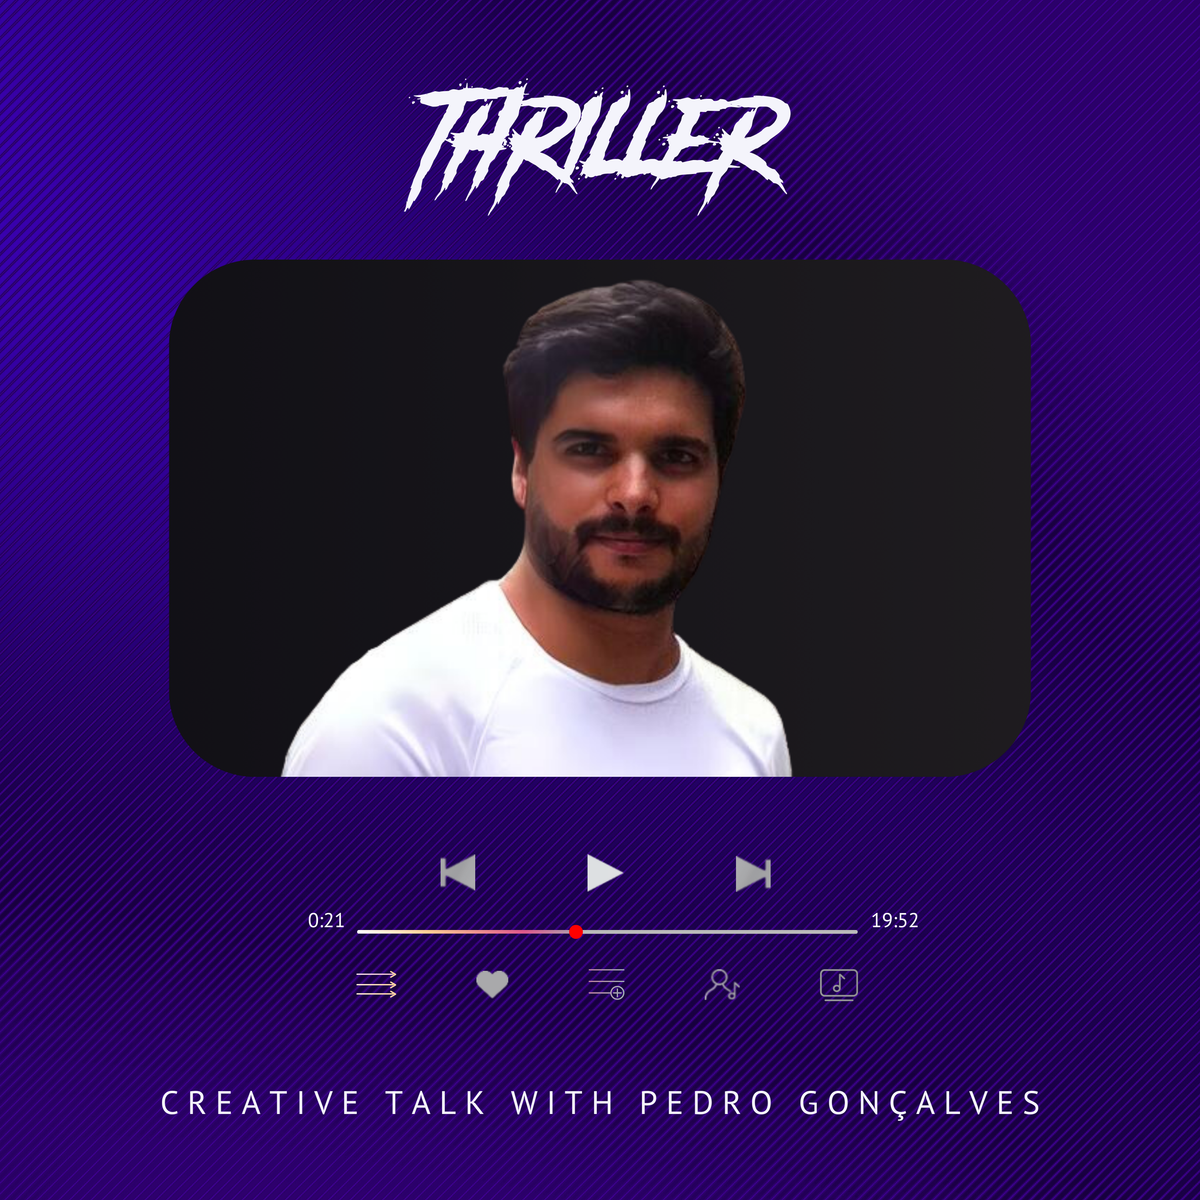 Creative talk with Pedro Gonçalves